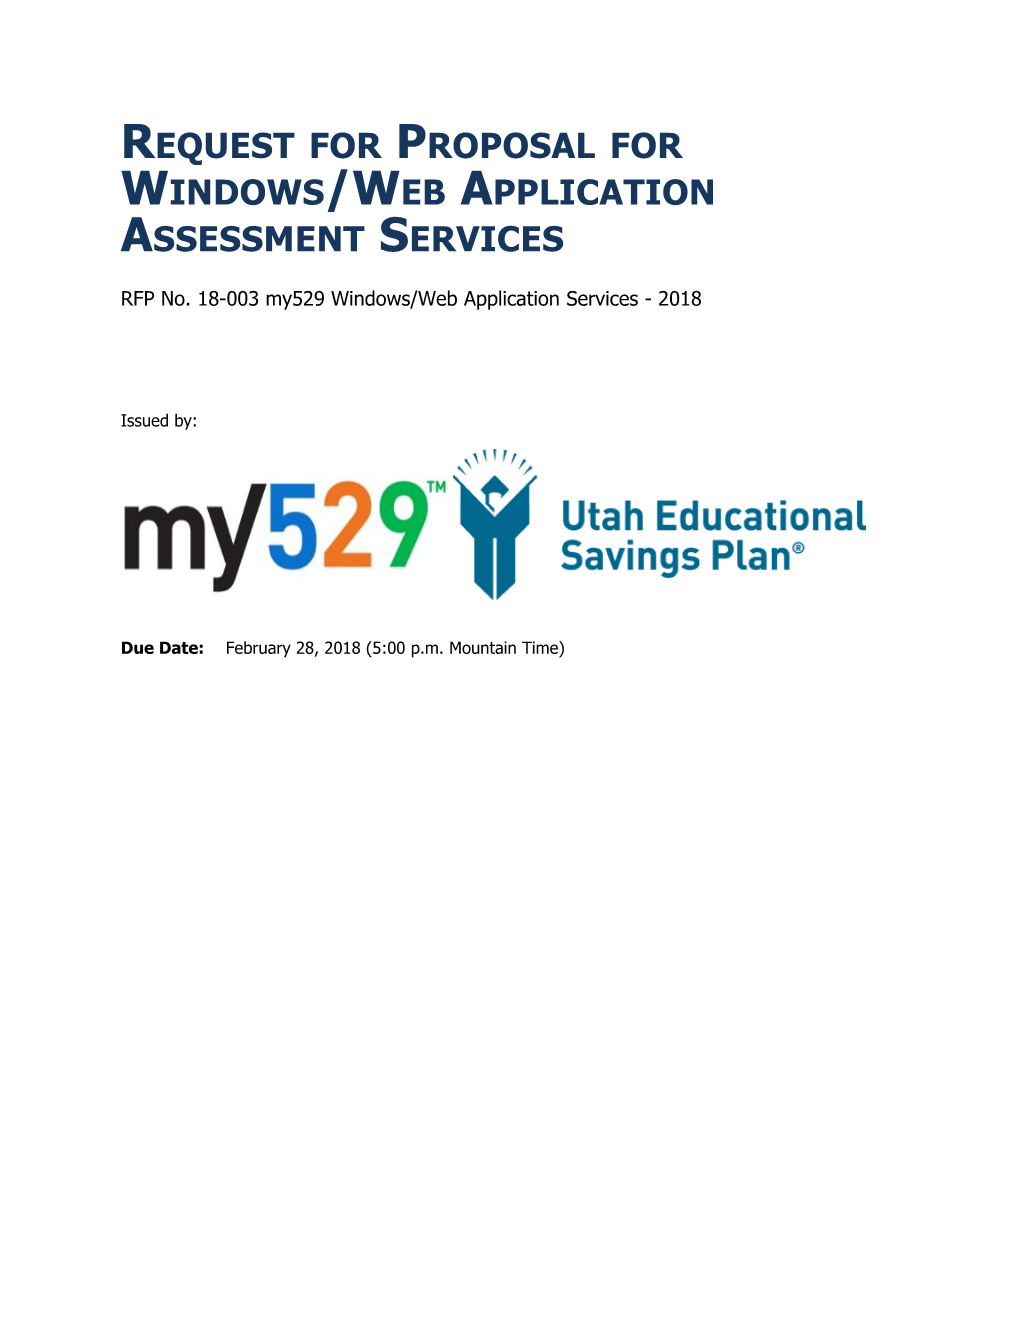 RFP No. 18-003My529windows/Web Application Services - 2018